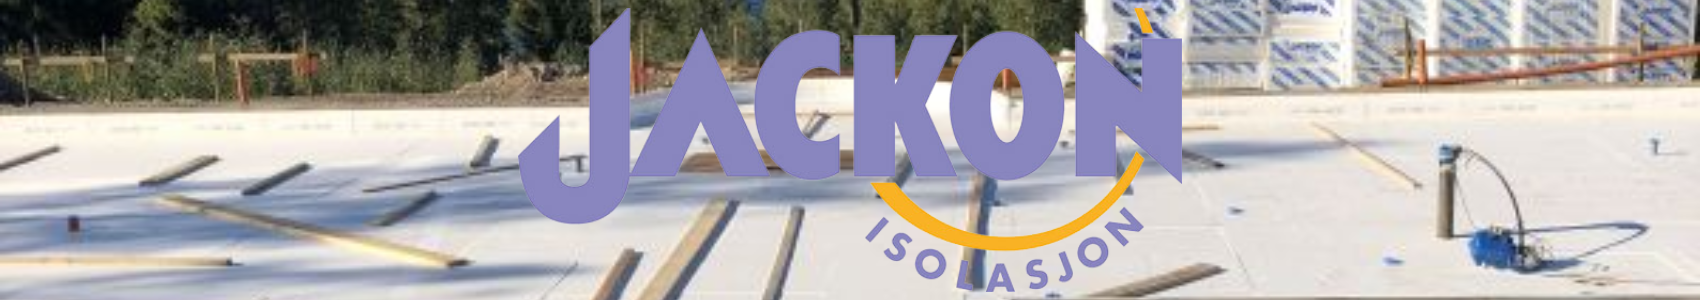 Jackon logo banner